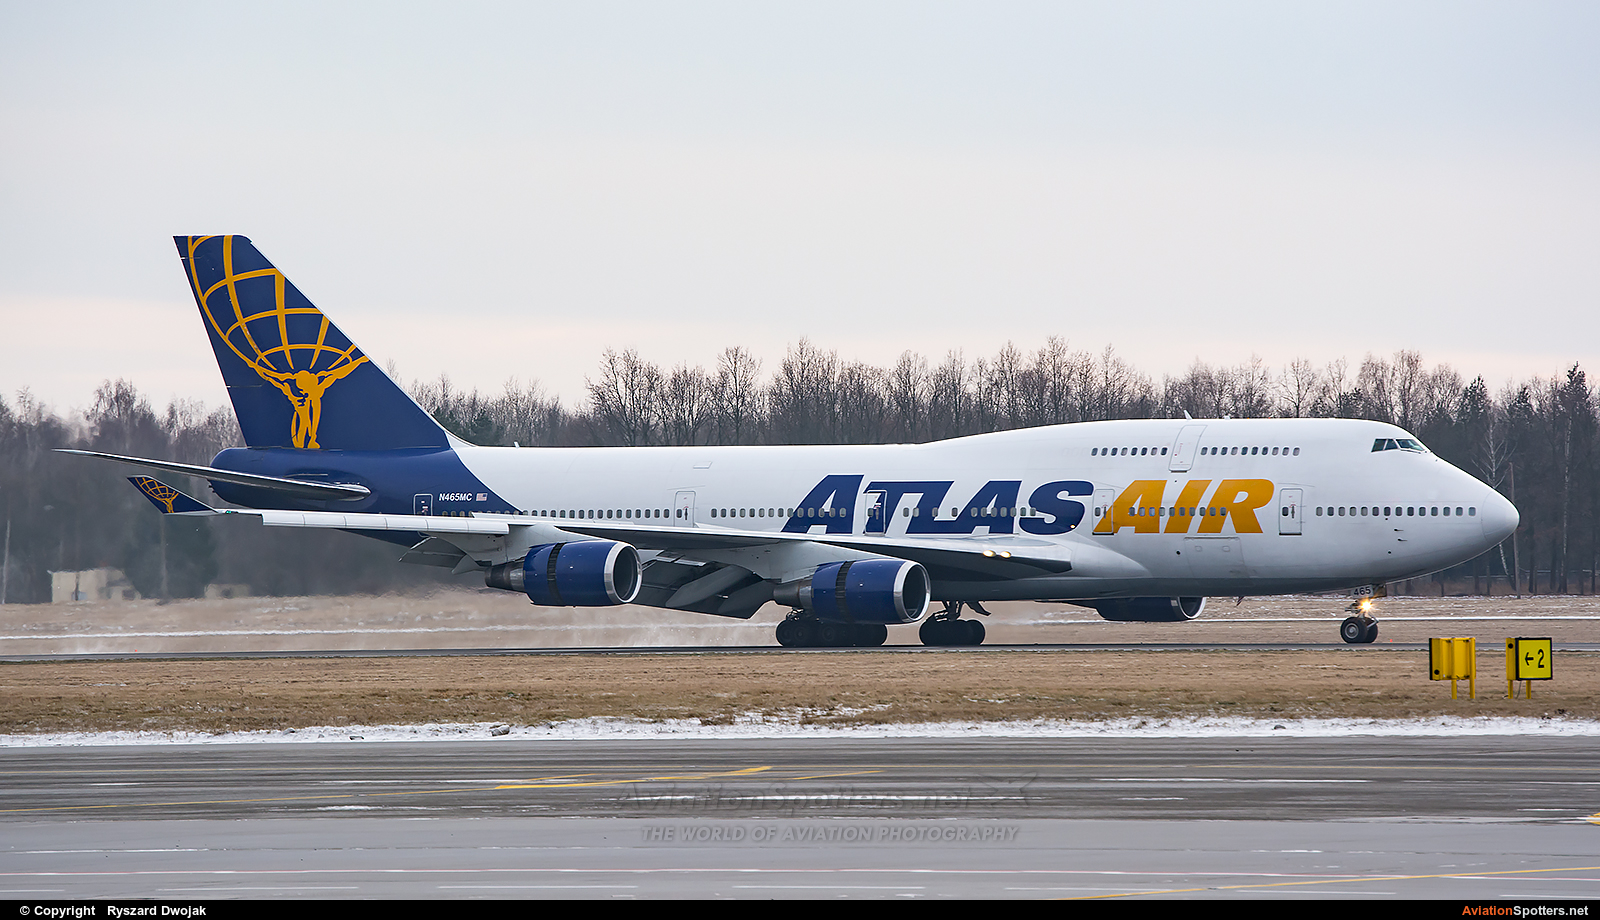 Atlas Air  -  747-446  (N465MC) By Ryszard Dwojak (ryś)